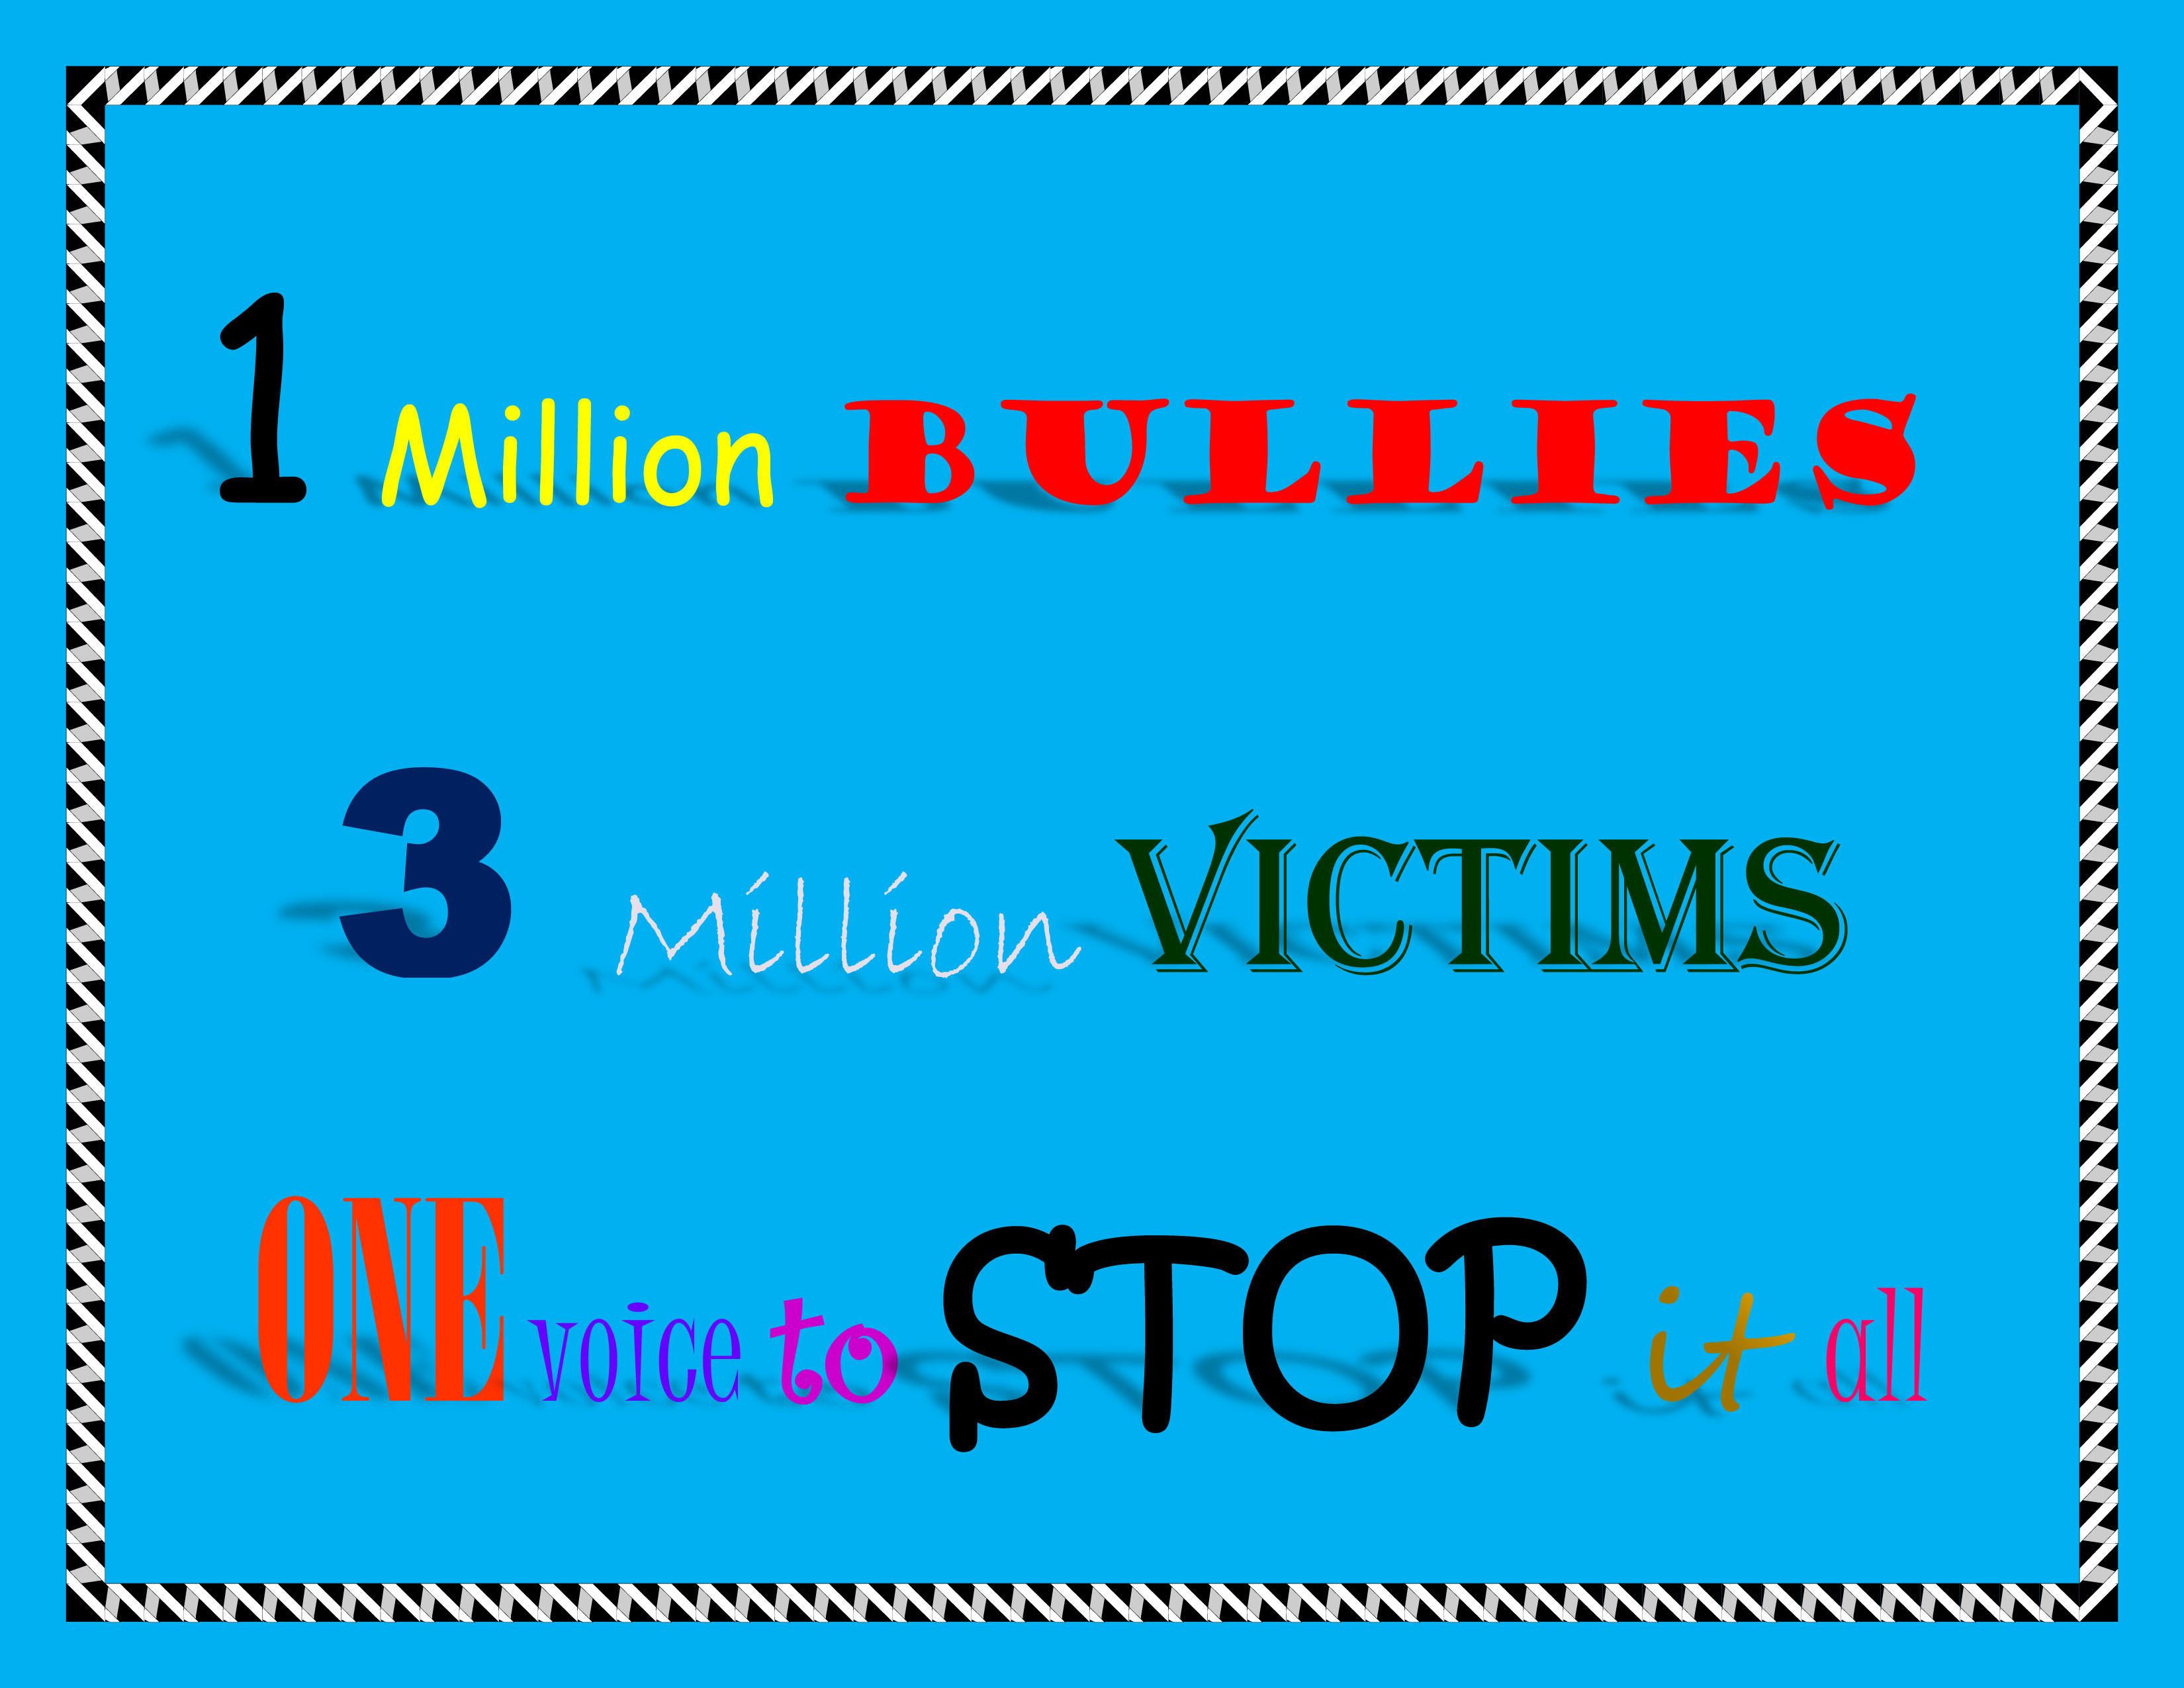 Bettendorf Middle School launches anti-bullying billboard | WQAD.com